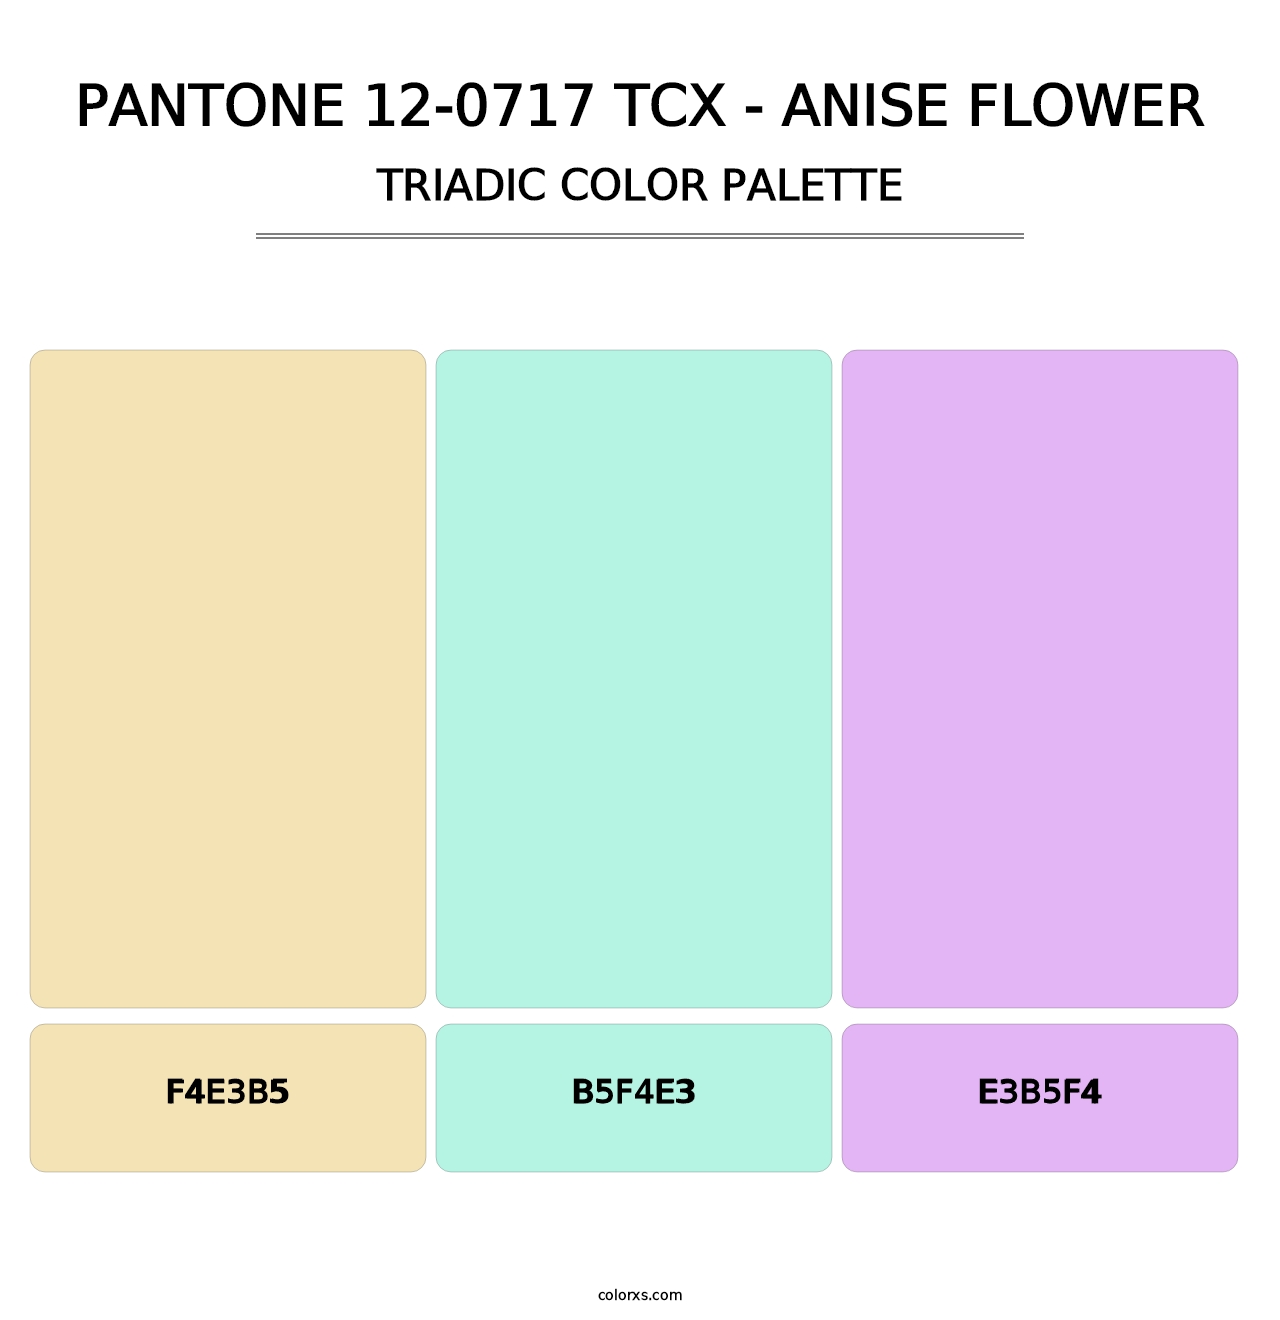 PANTONE 12-0717 TCX - Anise Flower - Triadic Color Palette